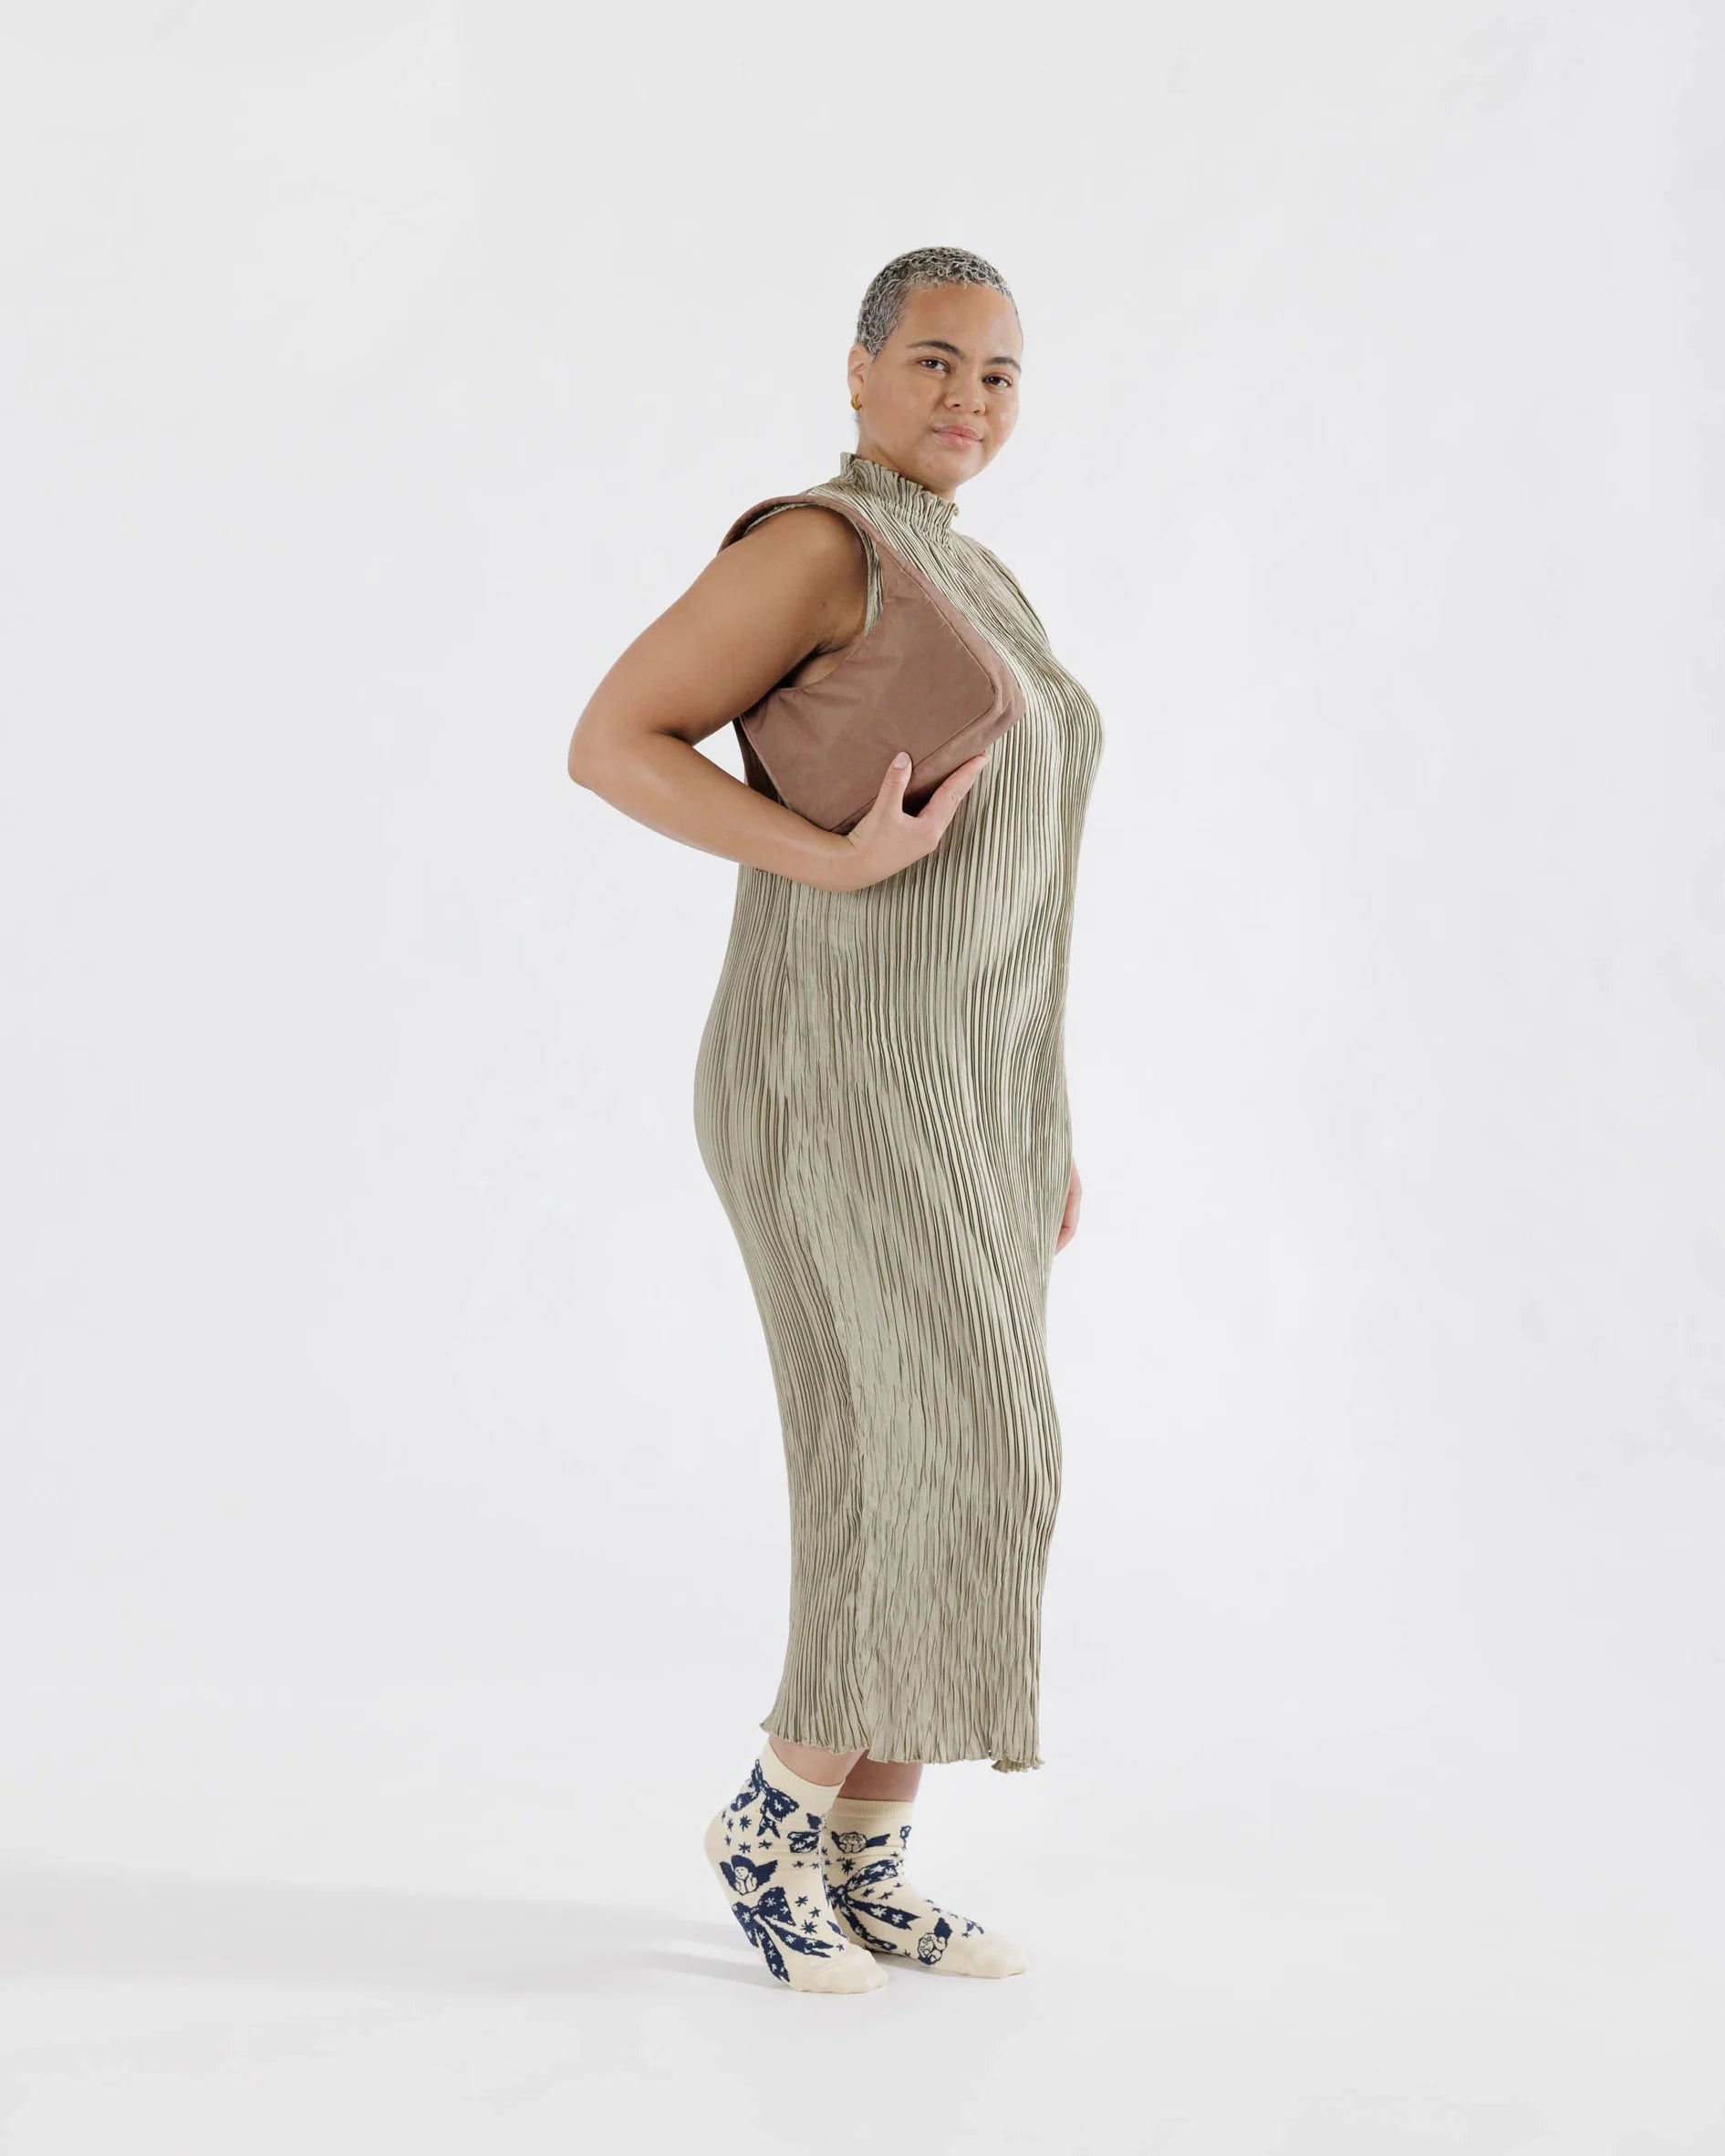 Baggu Mini Nylon Shoulder Bag-Cocoa | Collective Request 